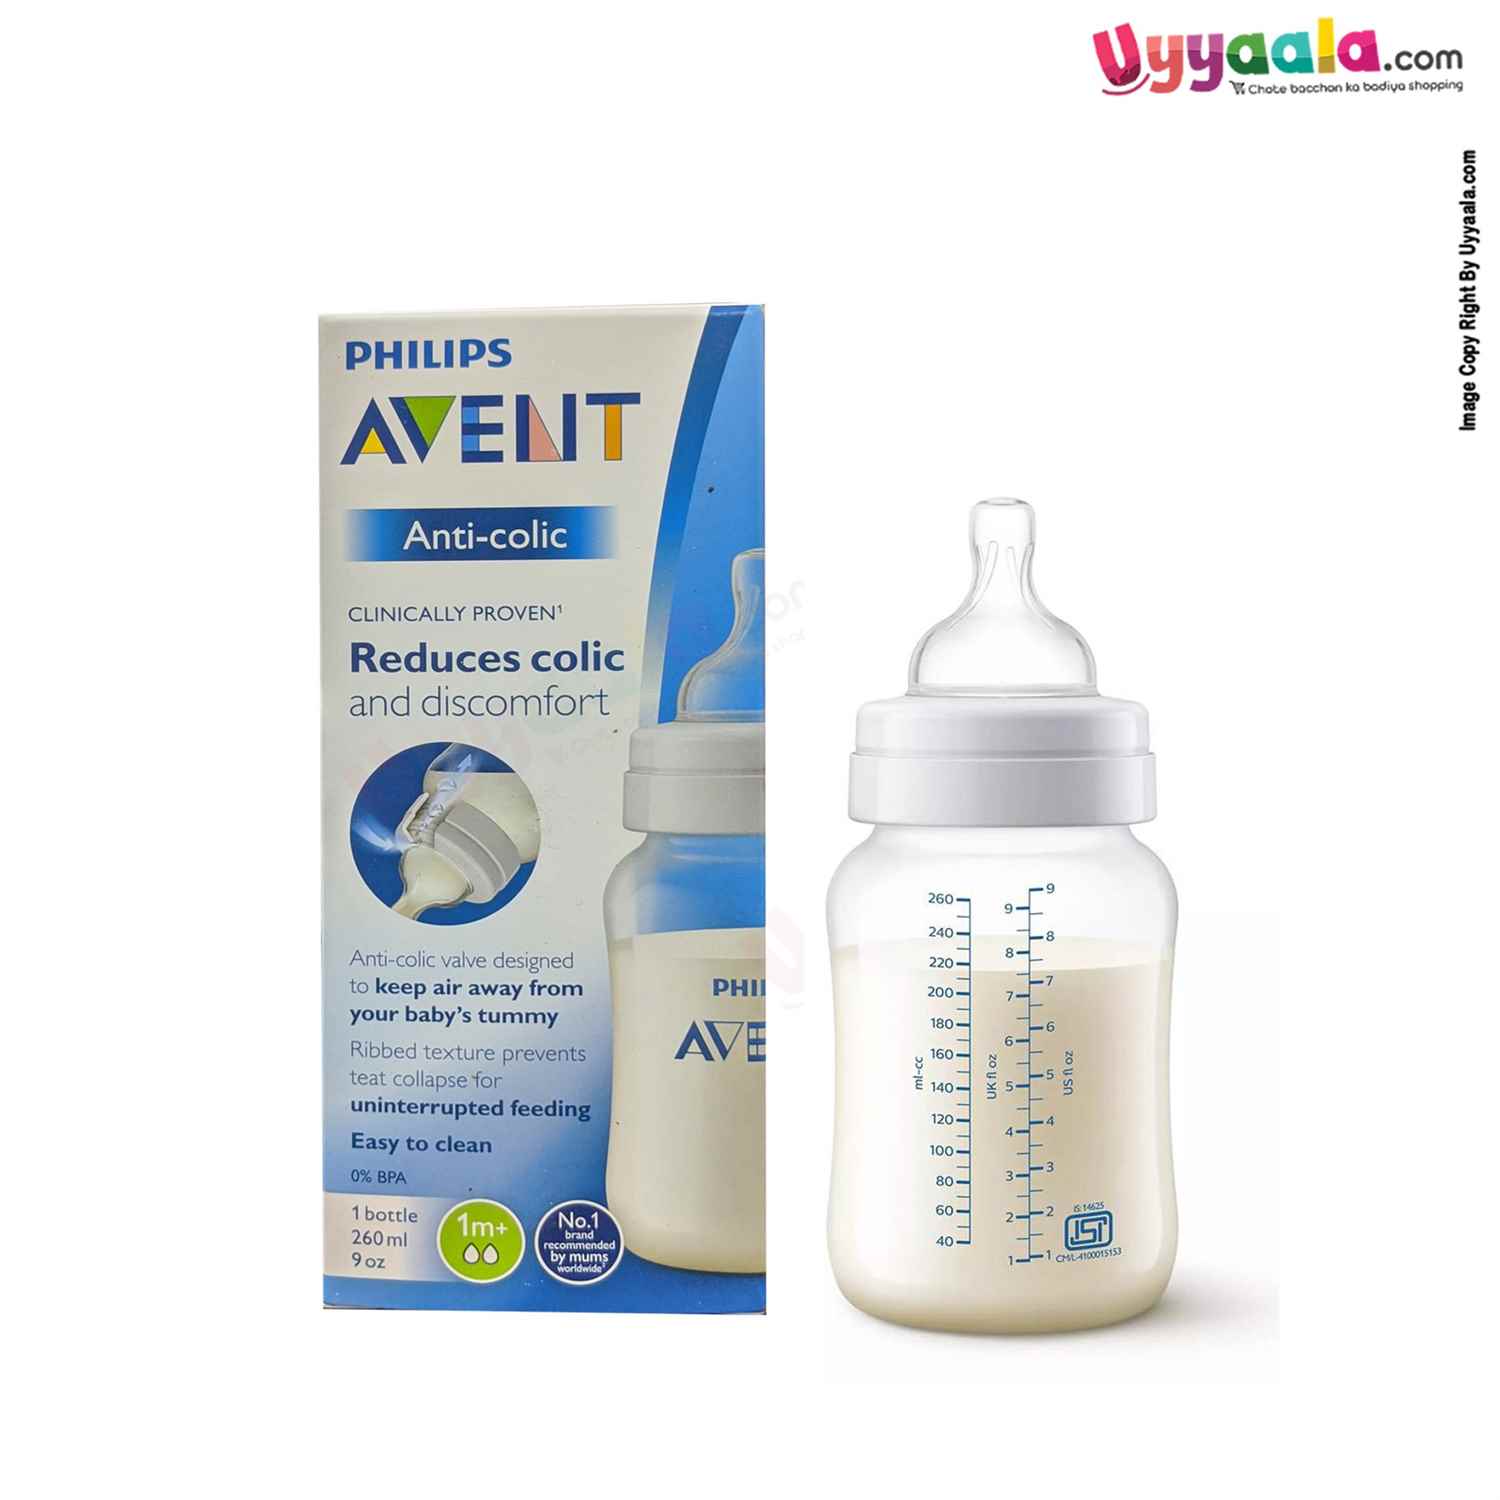 PHILIPS AVENT Anti-colic baby feeding bottle - 260ml, 1+m